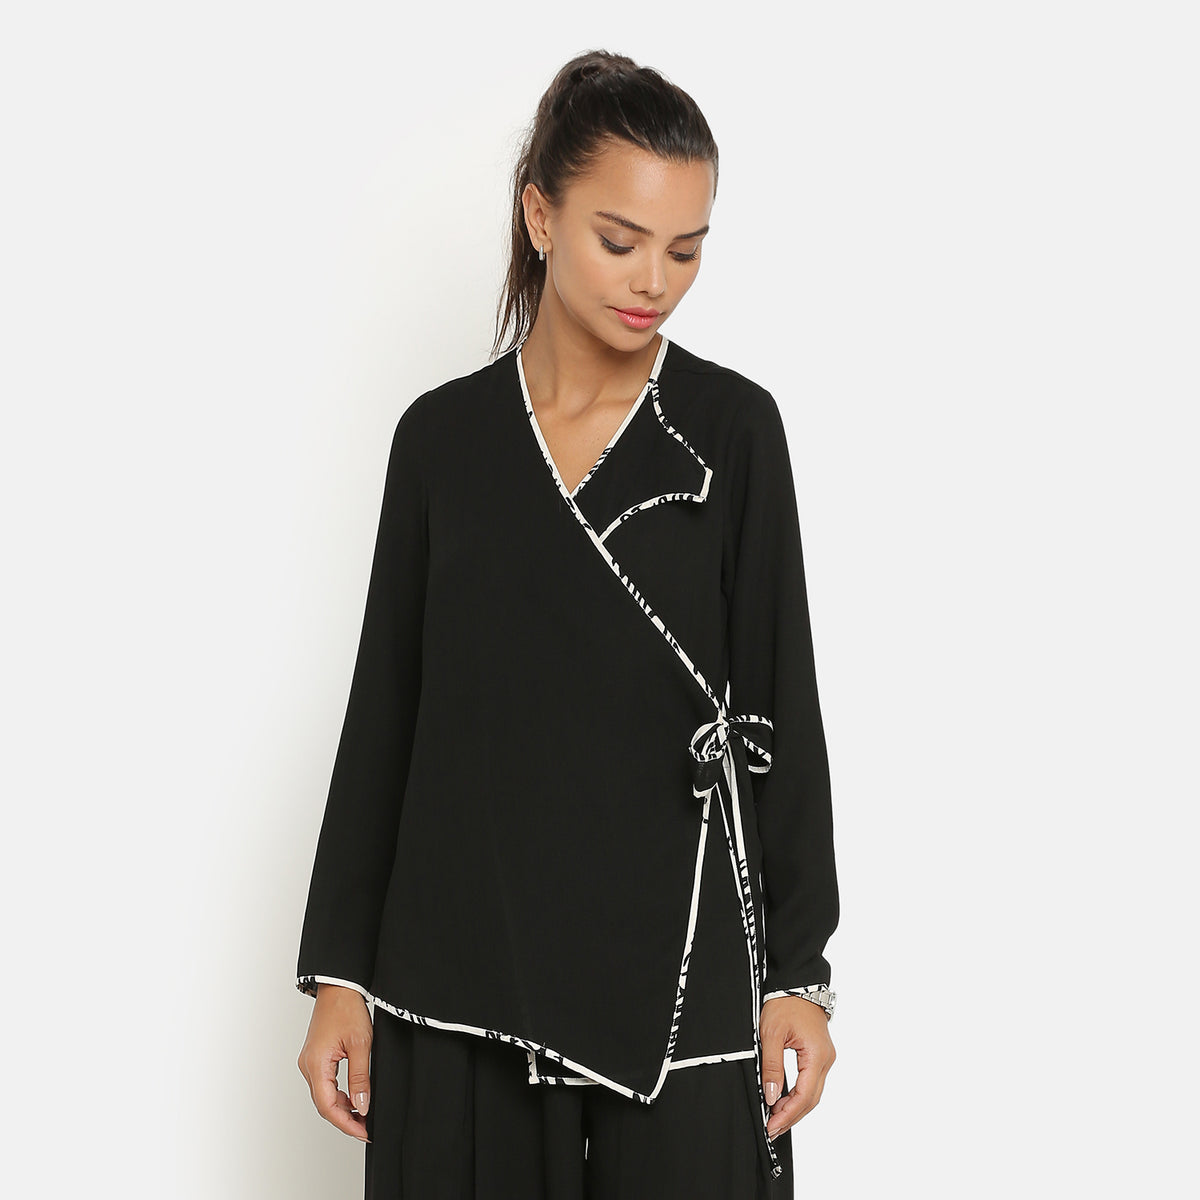 Black overlap jacket with side knot